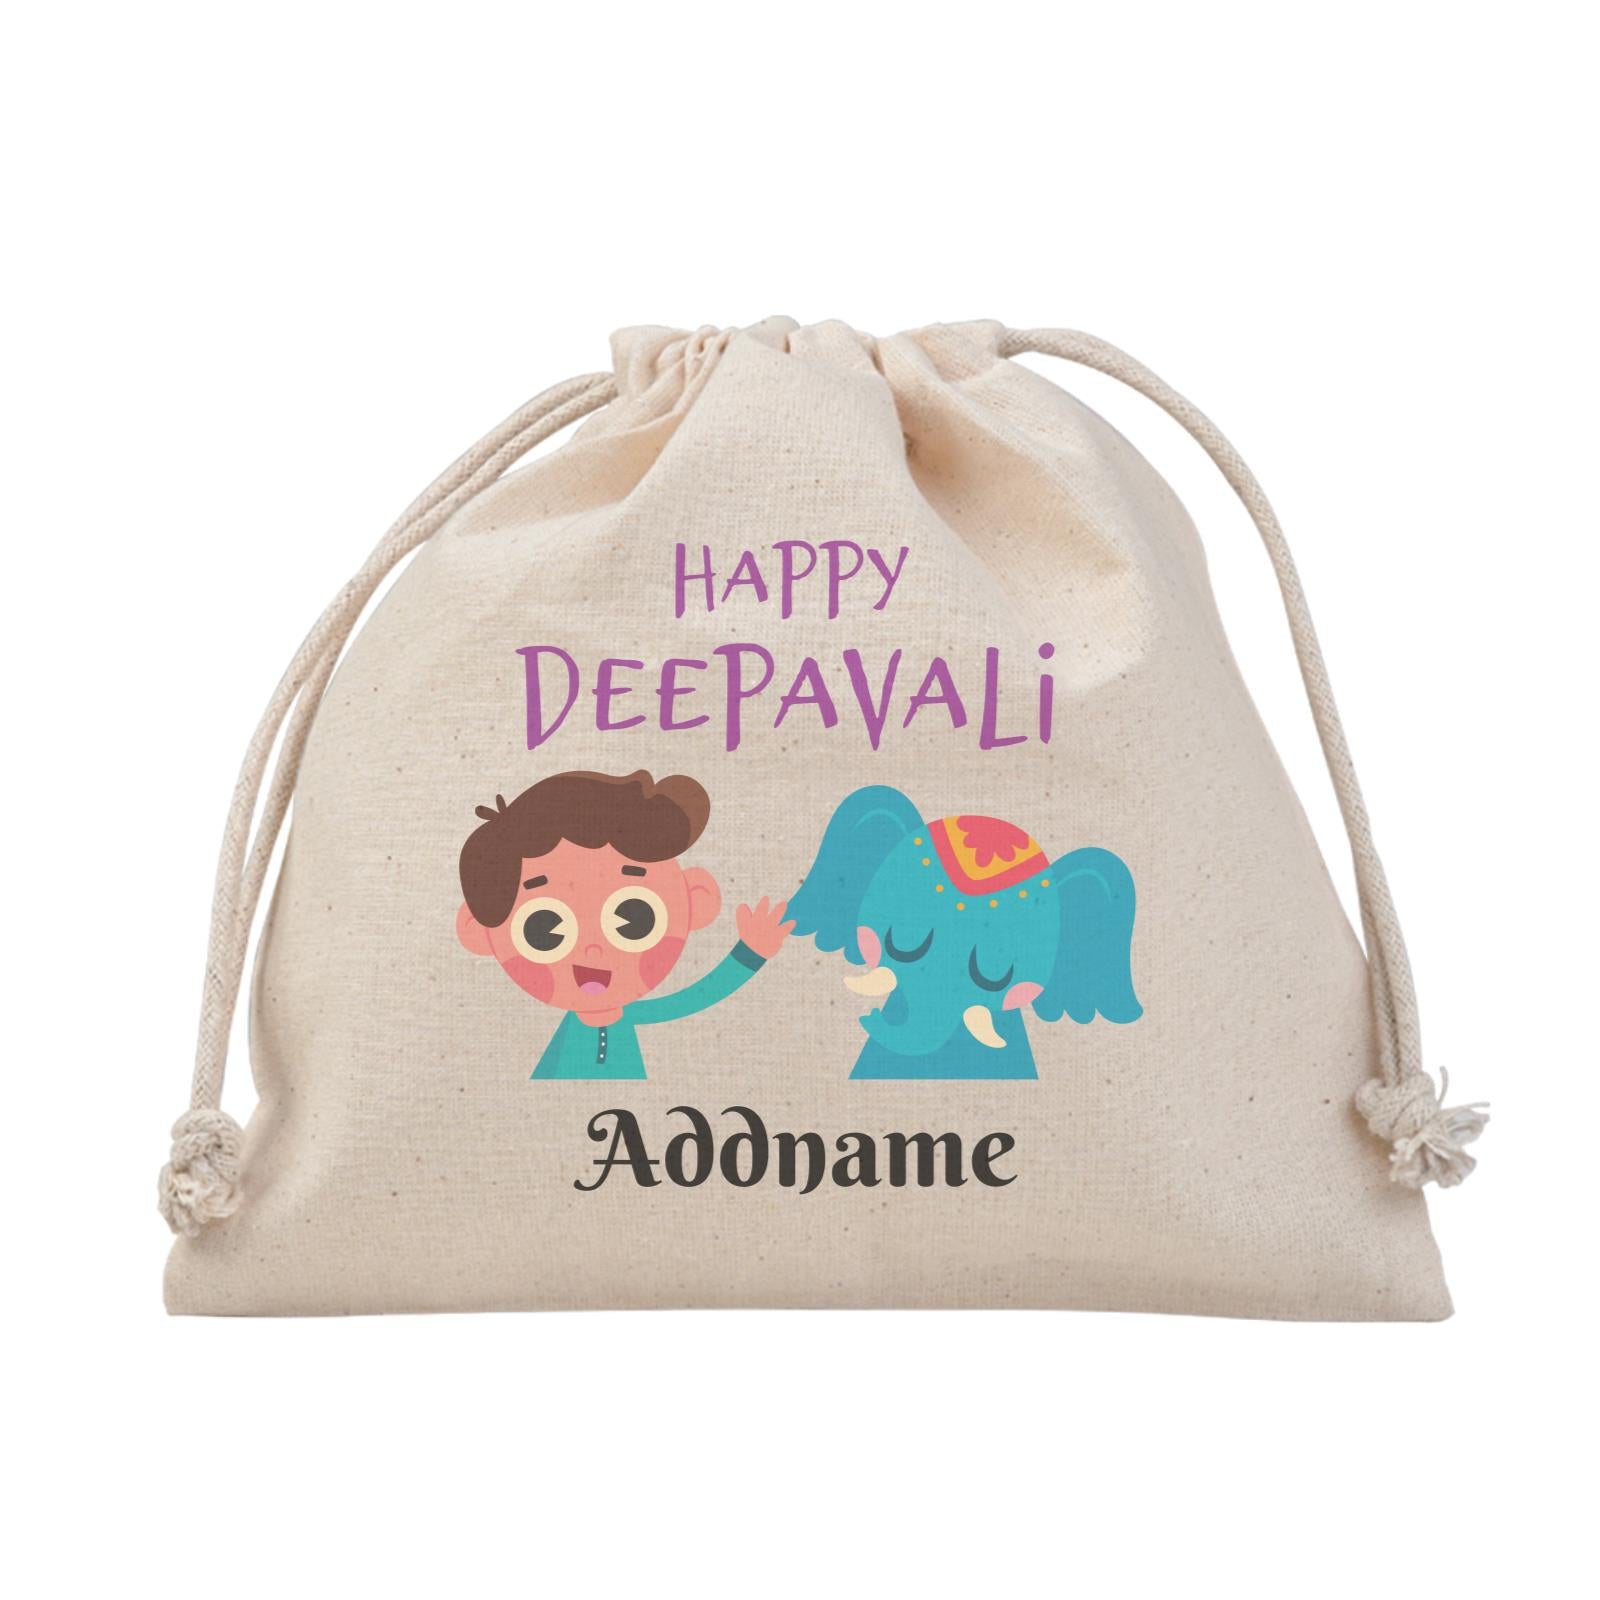 Deepavali Series Little Boy Wishes You Happy Deepavali Satchel